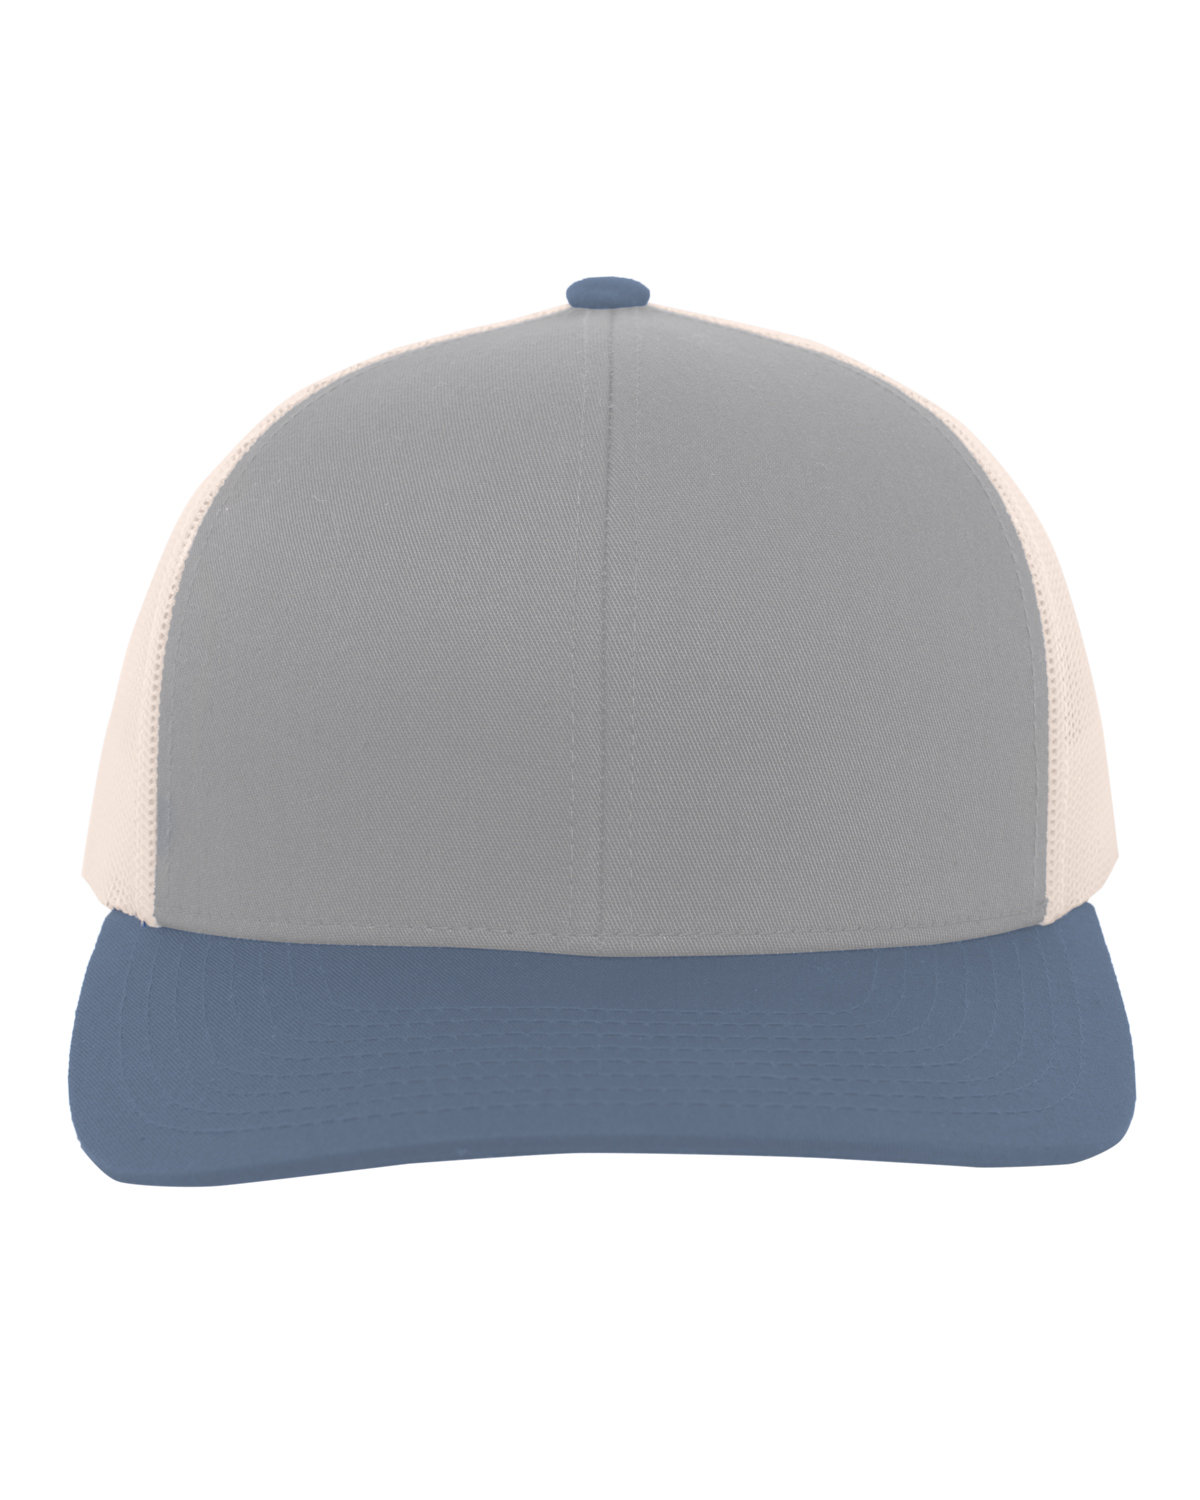 Pacific Headwear Trucker Snapback Hat HT GR/ BG/ OC BL 